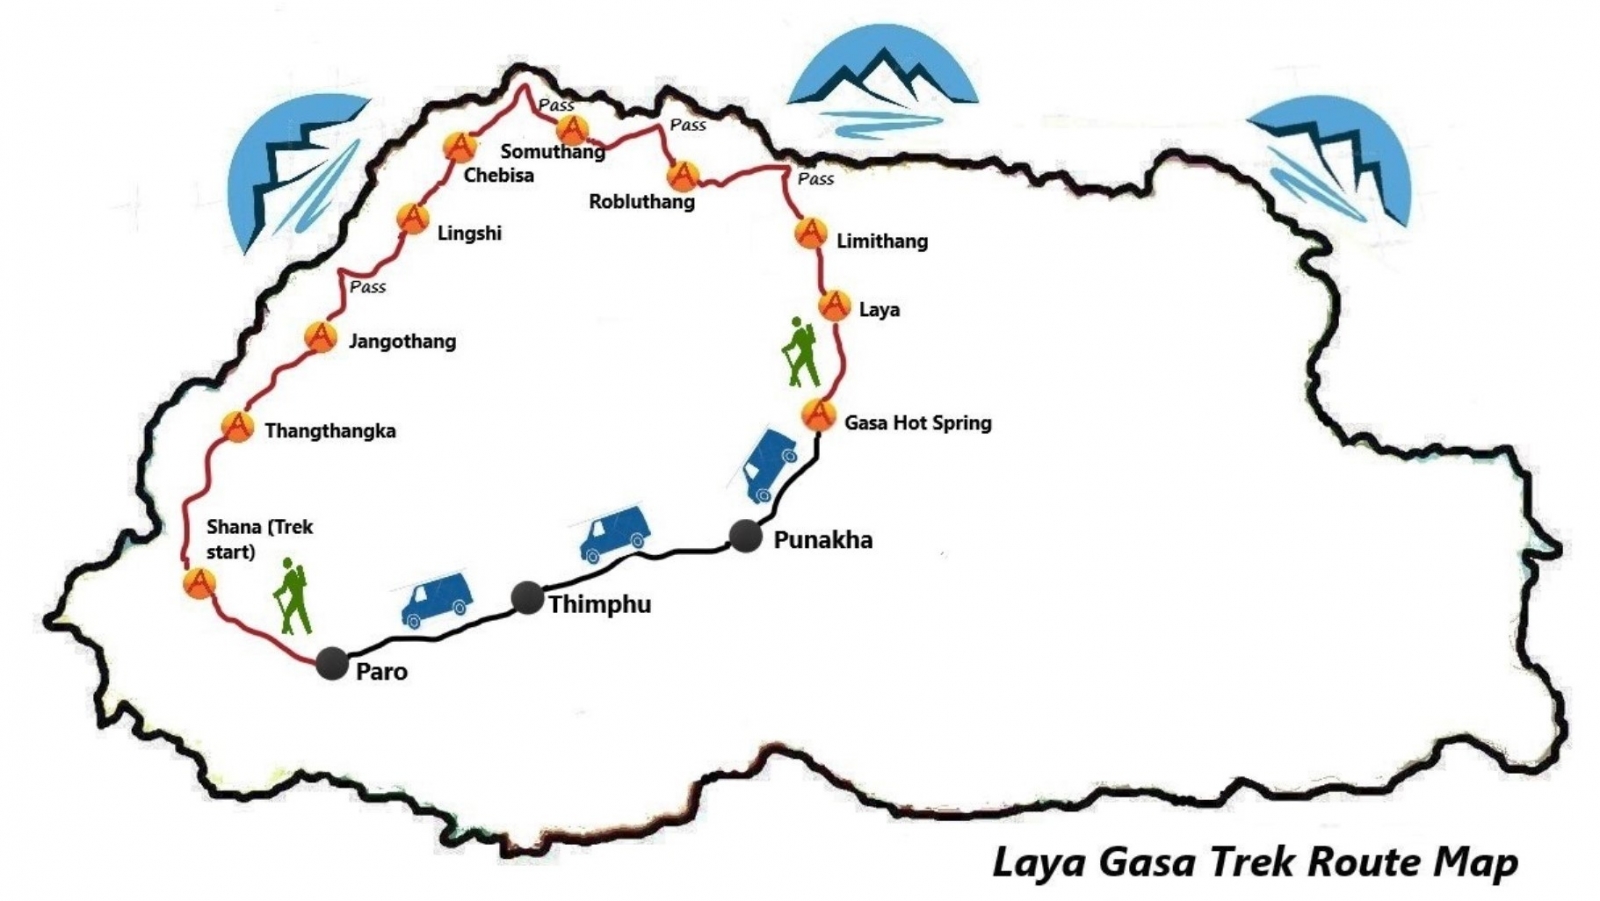 The Laya Gasa trek is one of the most beautiful trekking adventures in Bhutan